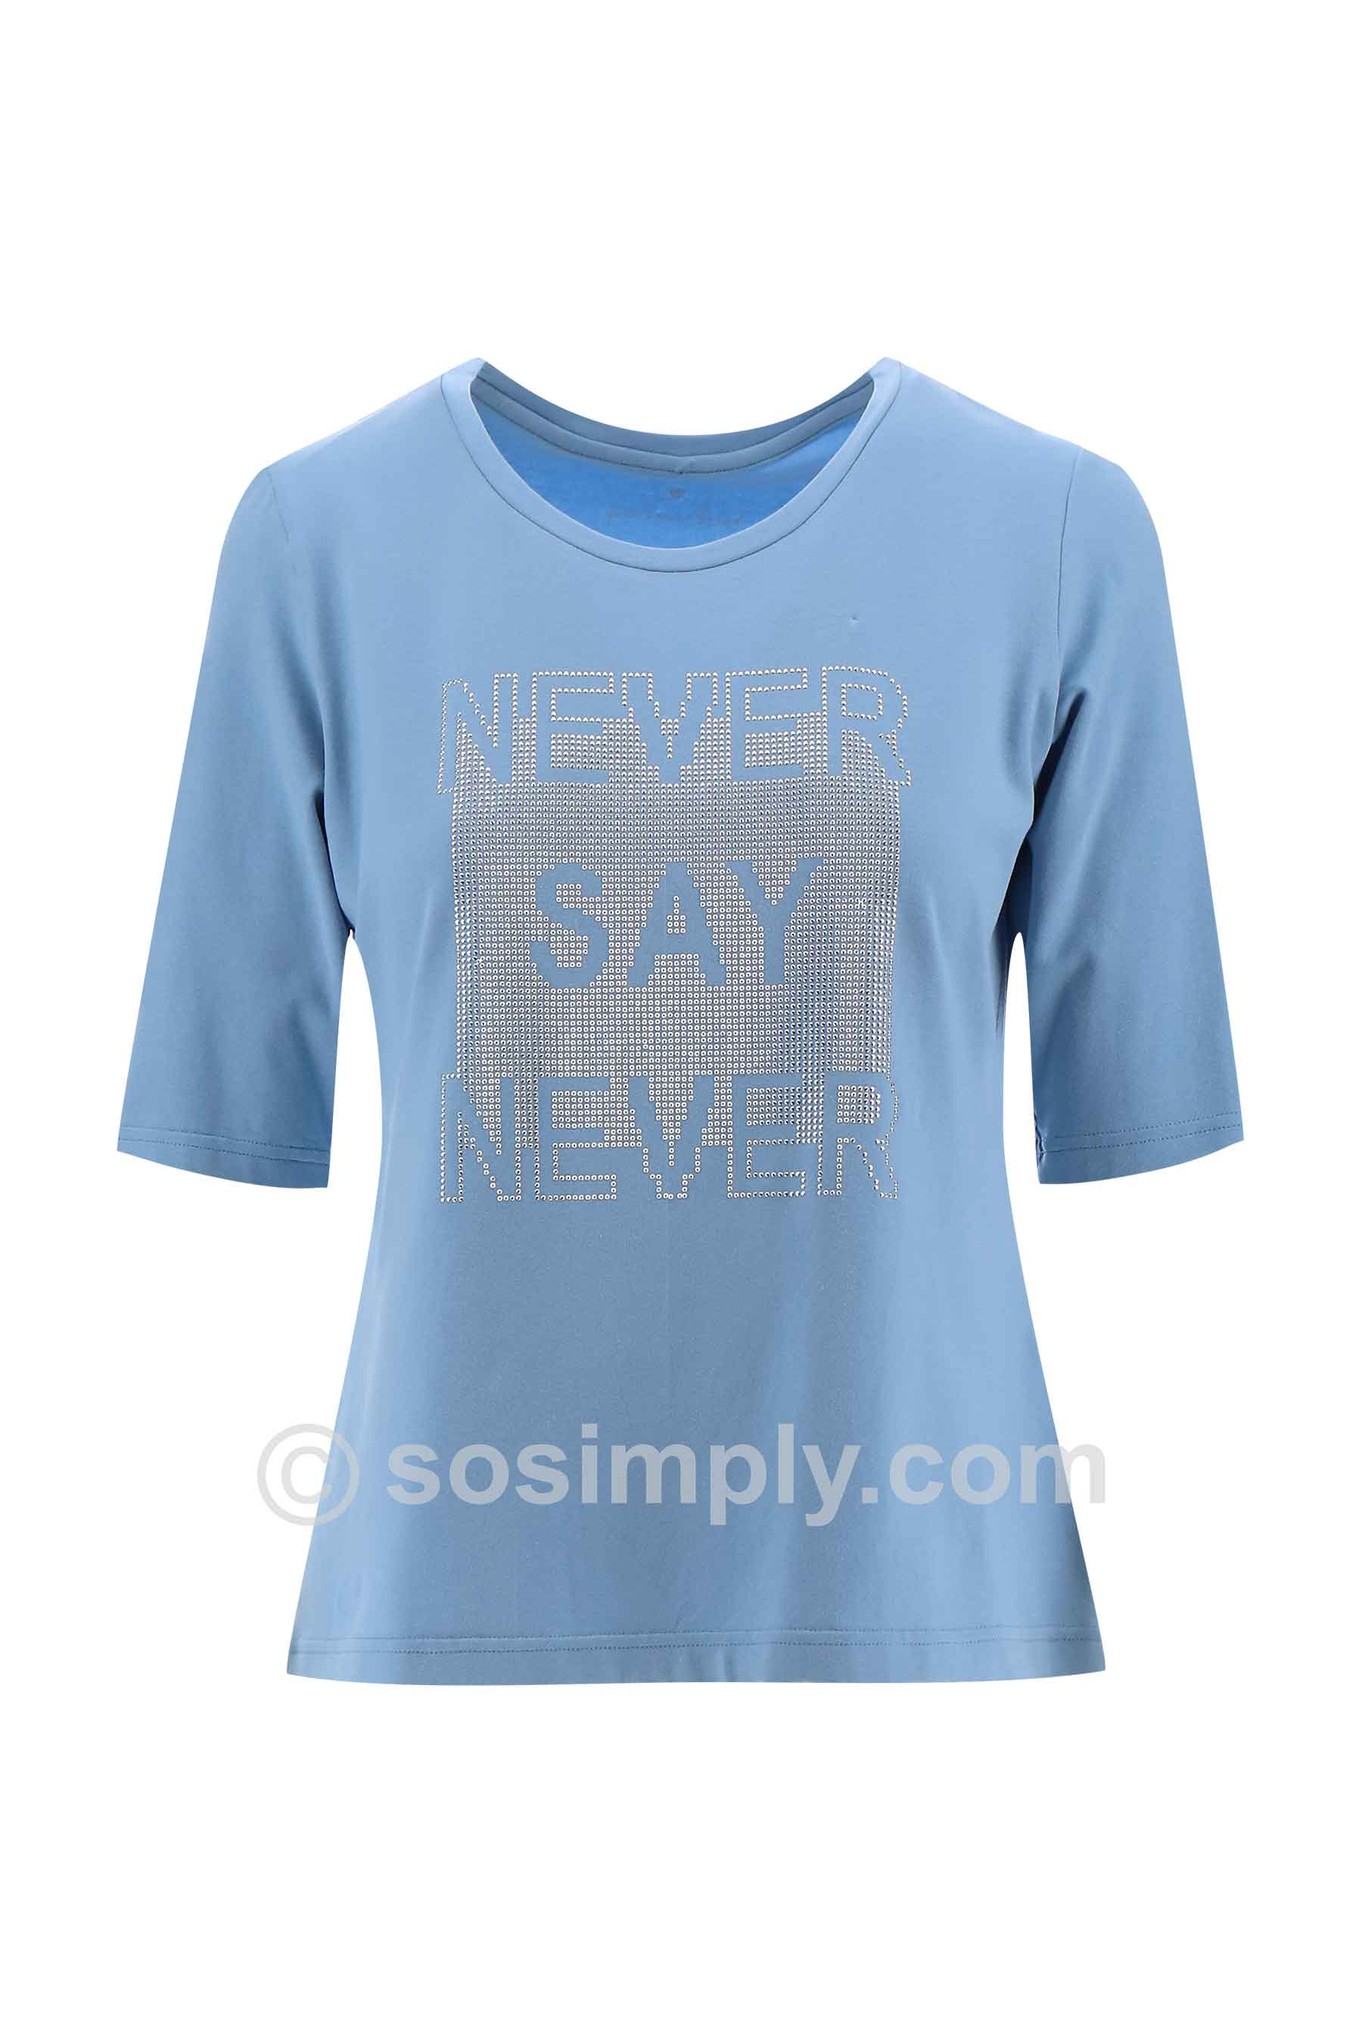 I’cona Never Say Never T-Shirt